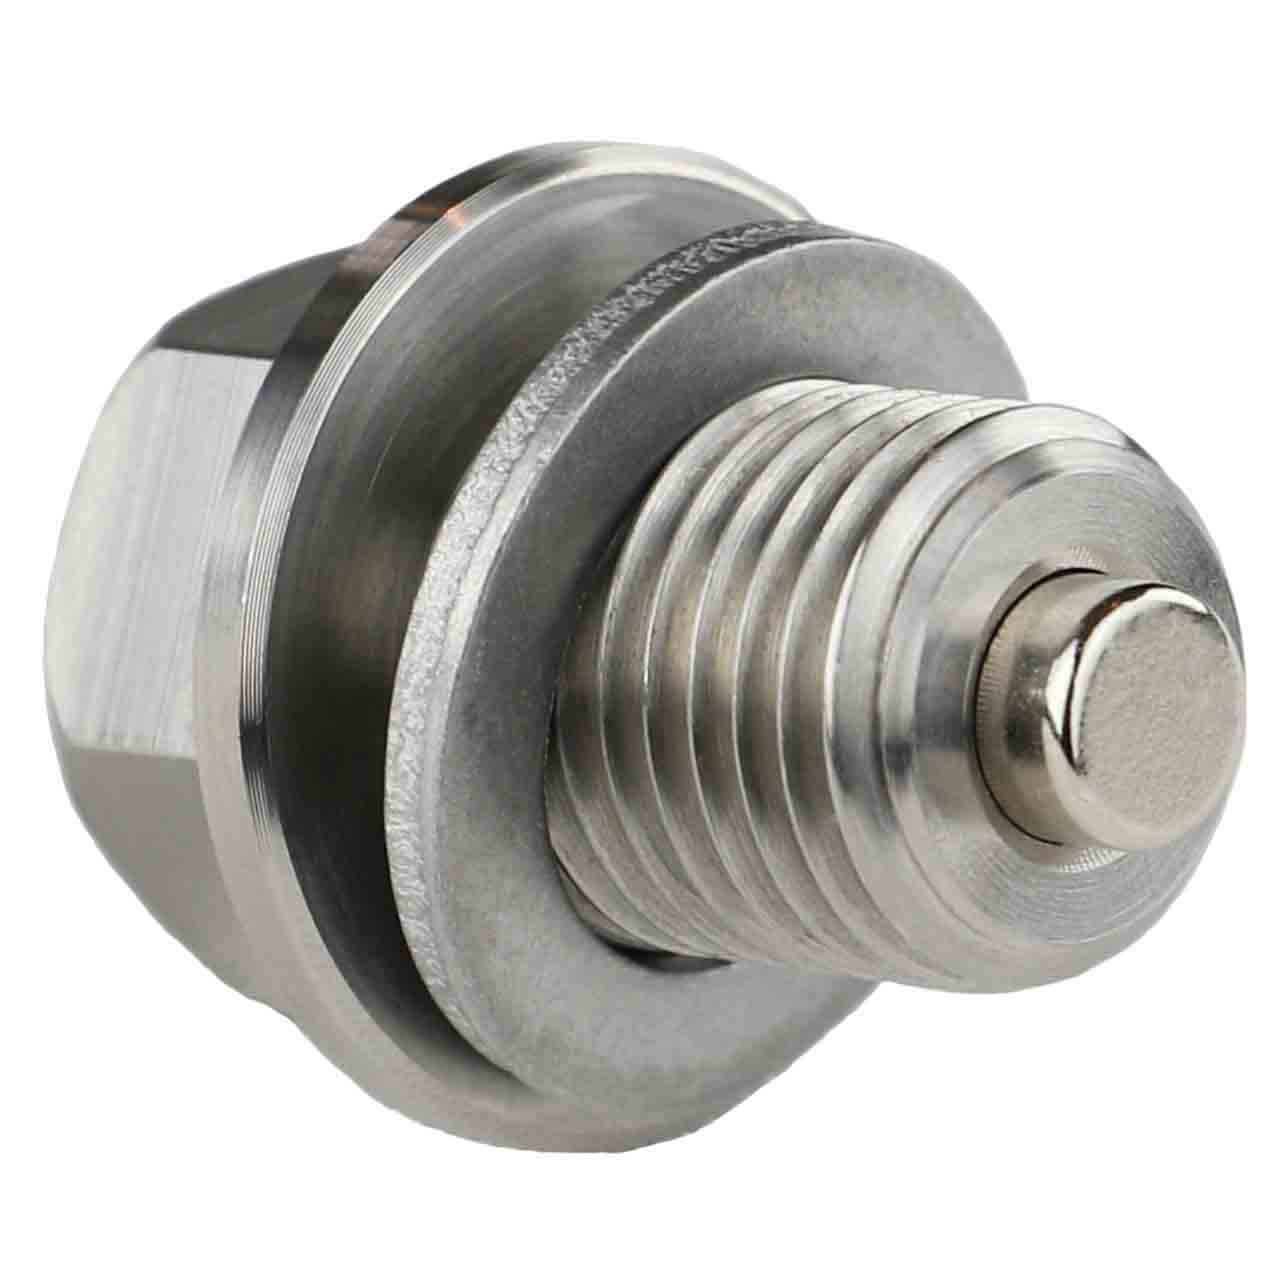 Suzuki Grand Vitara Magnetic Oil Drain Plug - 2009-2010 - 3.2 Liter - 6 Cylinder - Made In USA - Stainless Steel - Part Number 11518-63J01